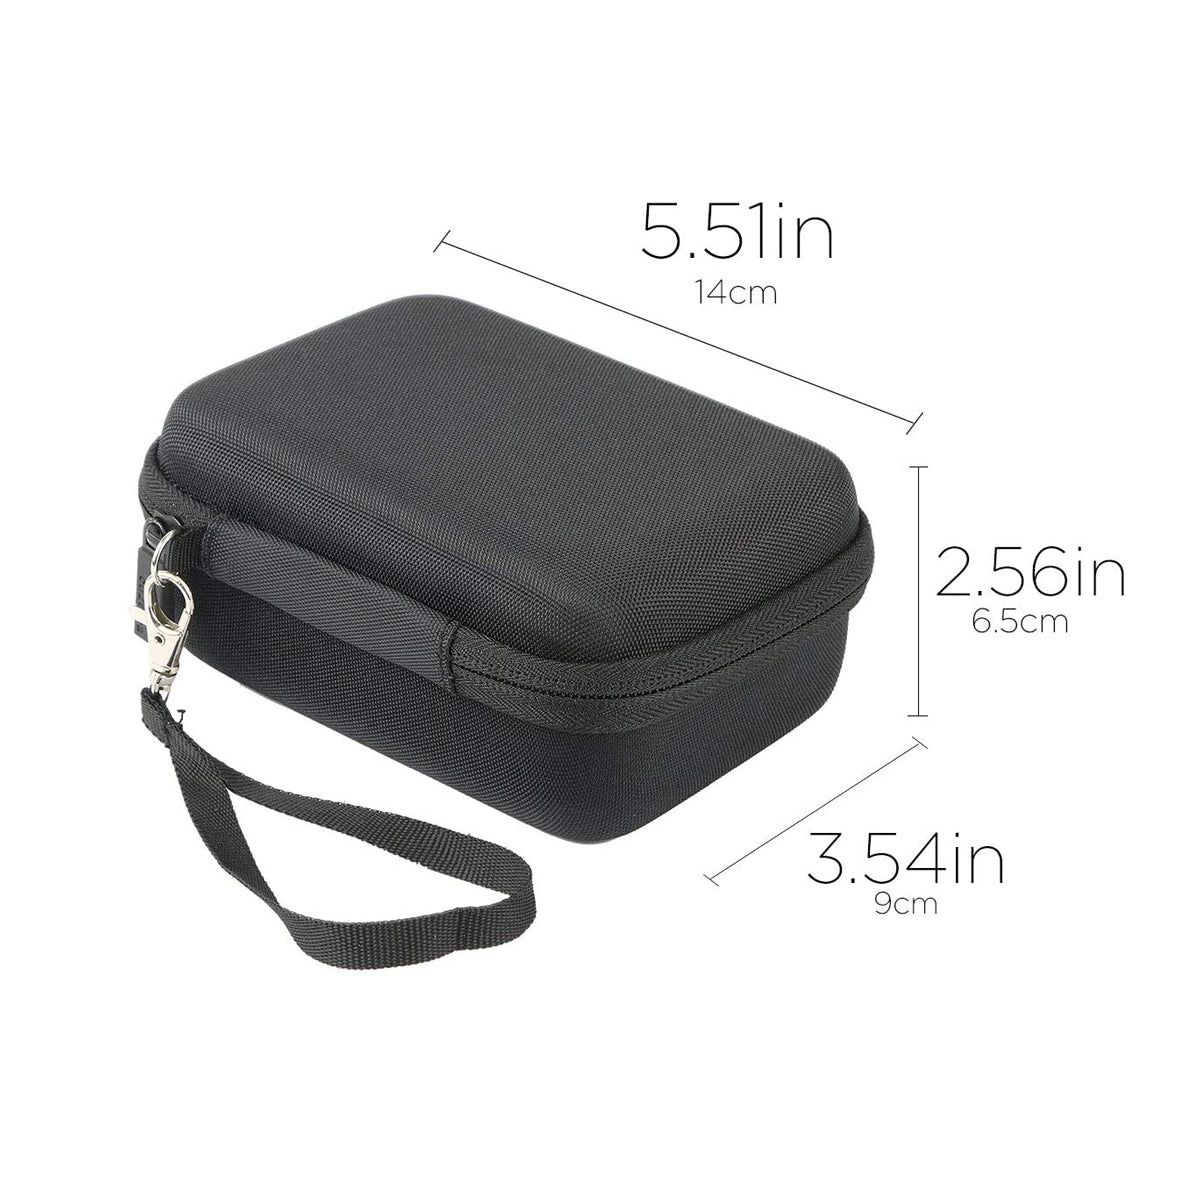 Zenko Instax Mini Evo Instant Camera Mini Link 2 Smartphone Printer Bag Accessories Protector Hard Case Lanyard Black